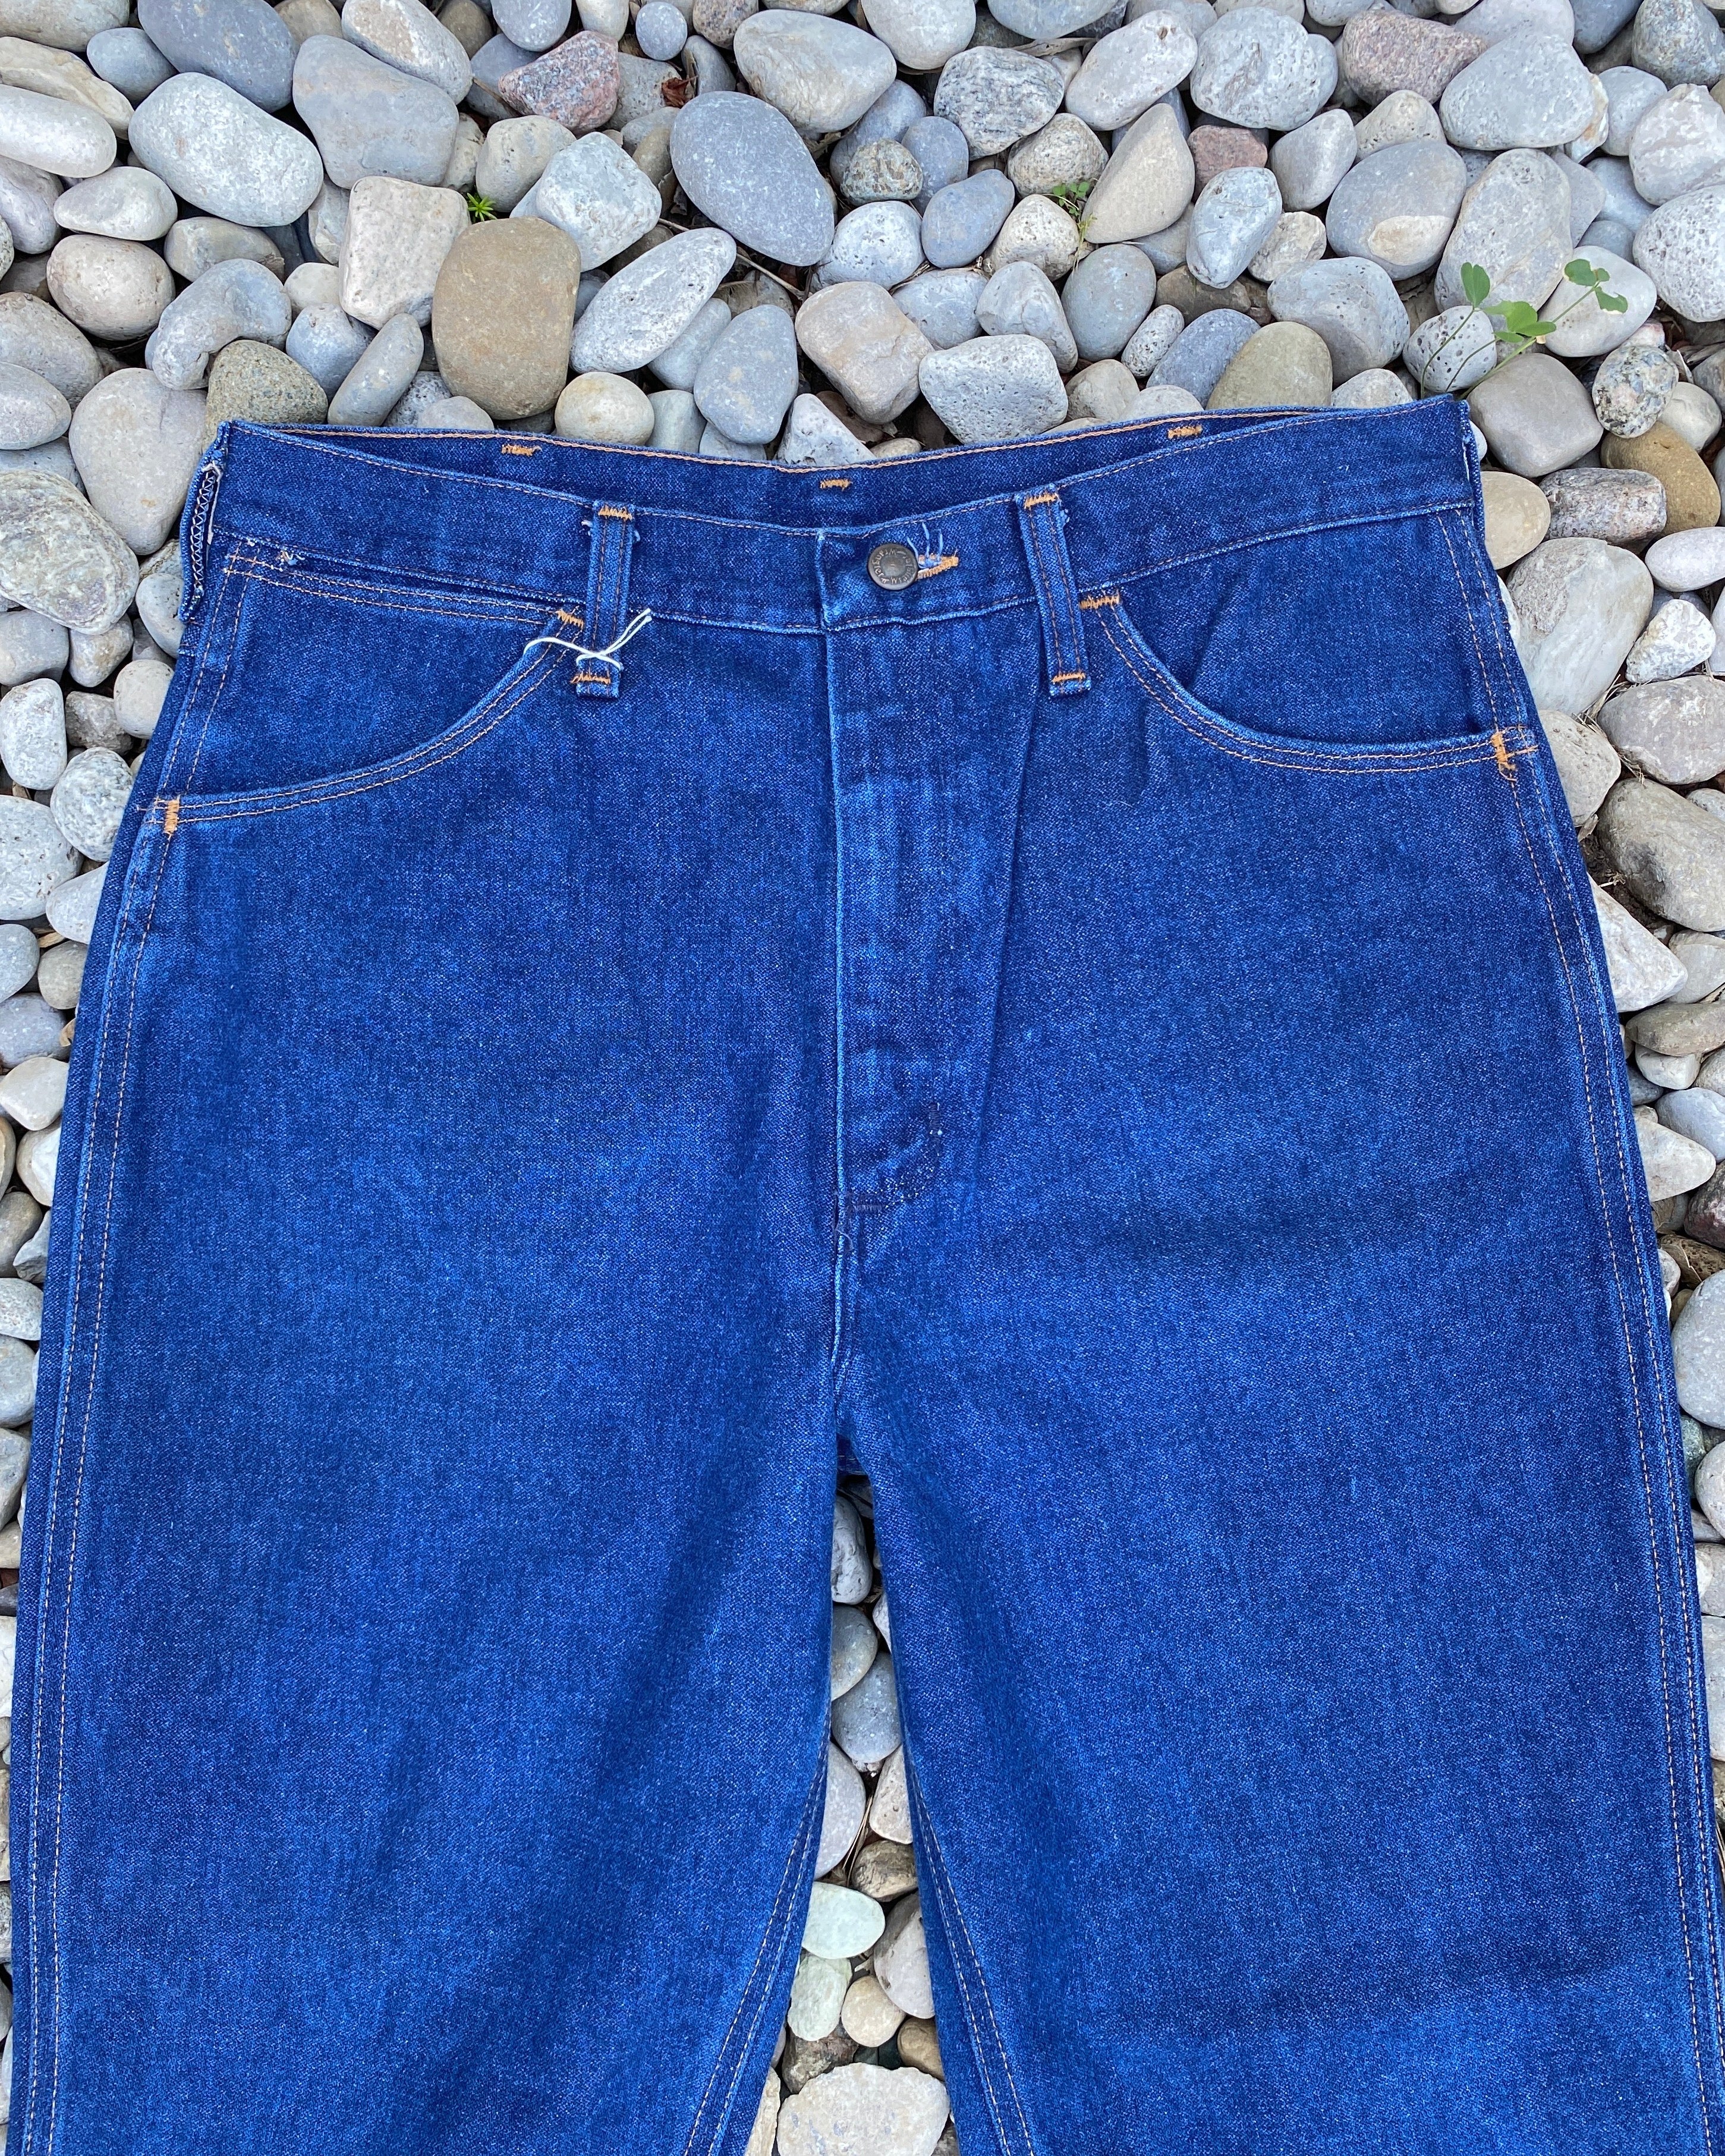 Vintage Wrangler 1970s Flare Dark Wash Jeans size 32 USA